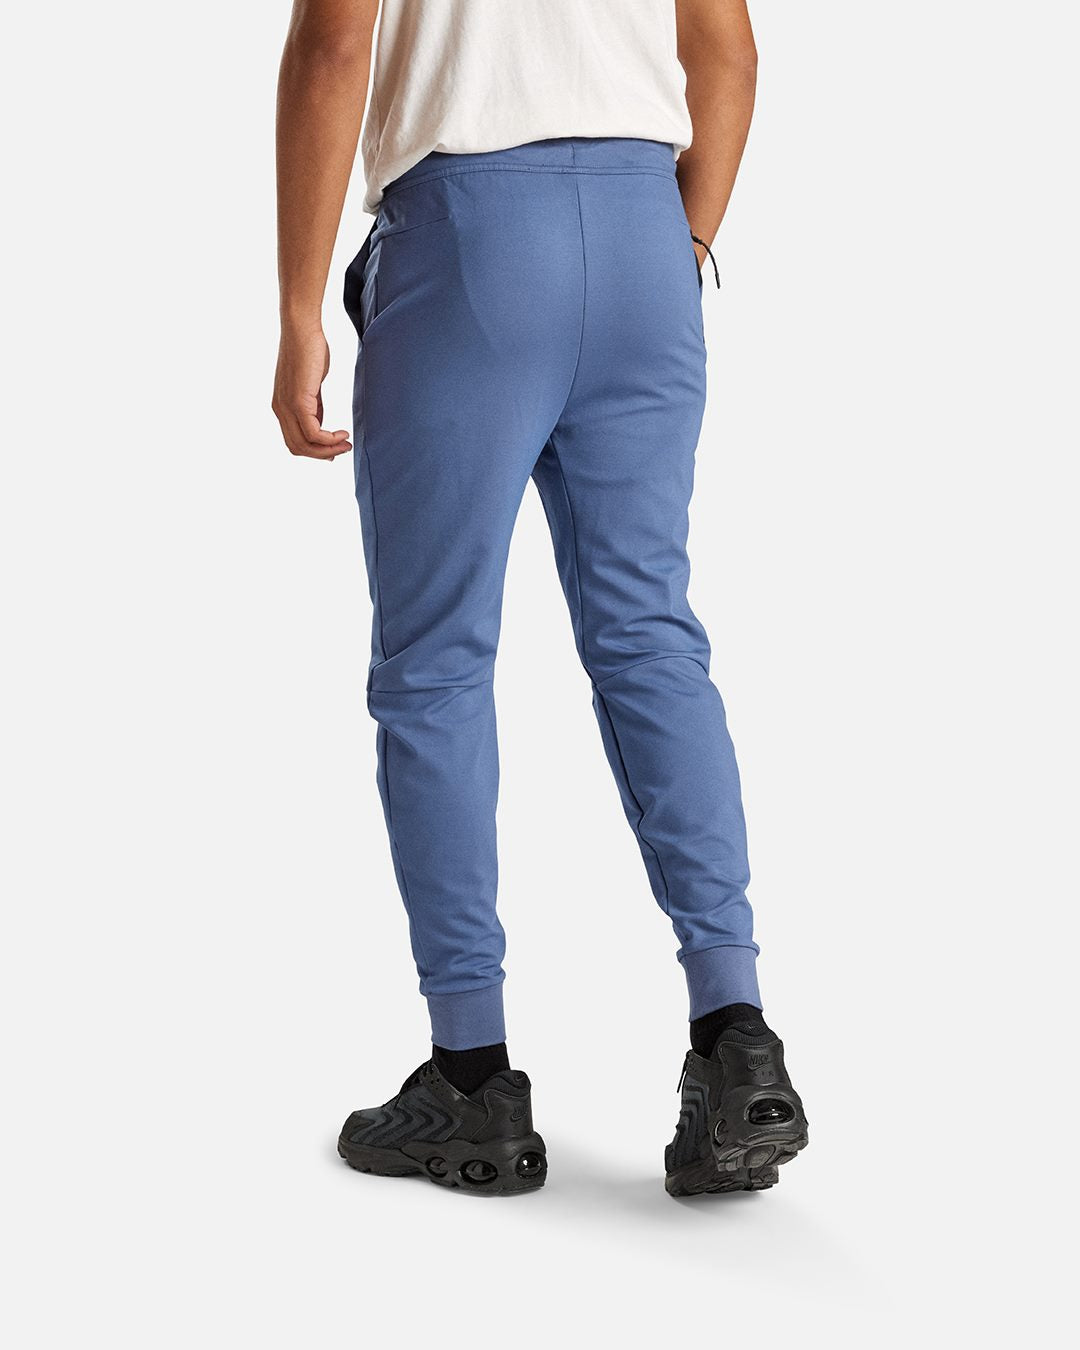 Nike Tech Fleece Lightweight Pants - Blue/Black